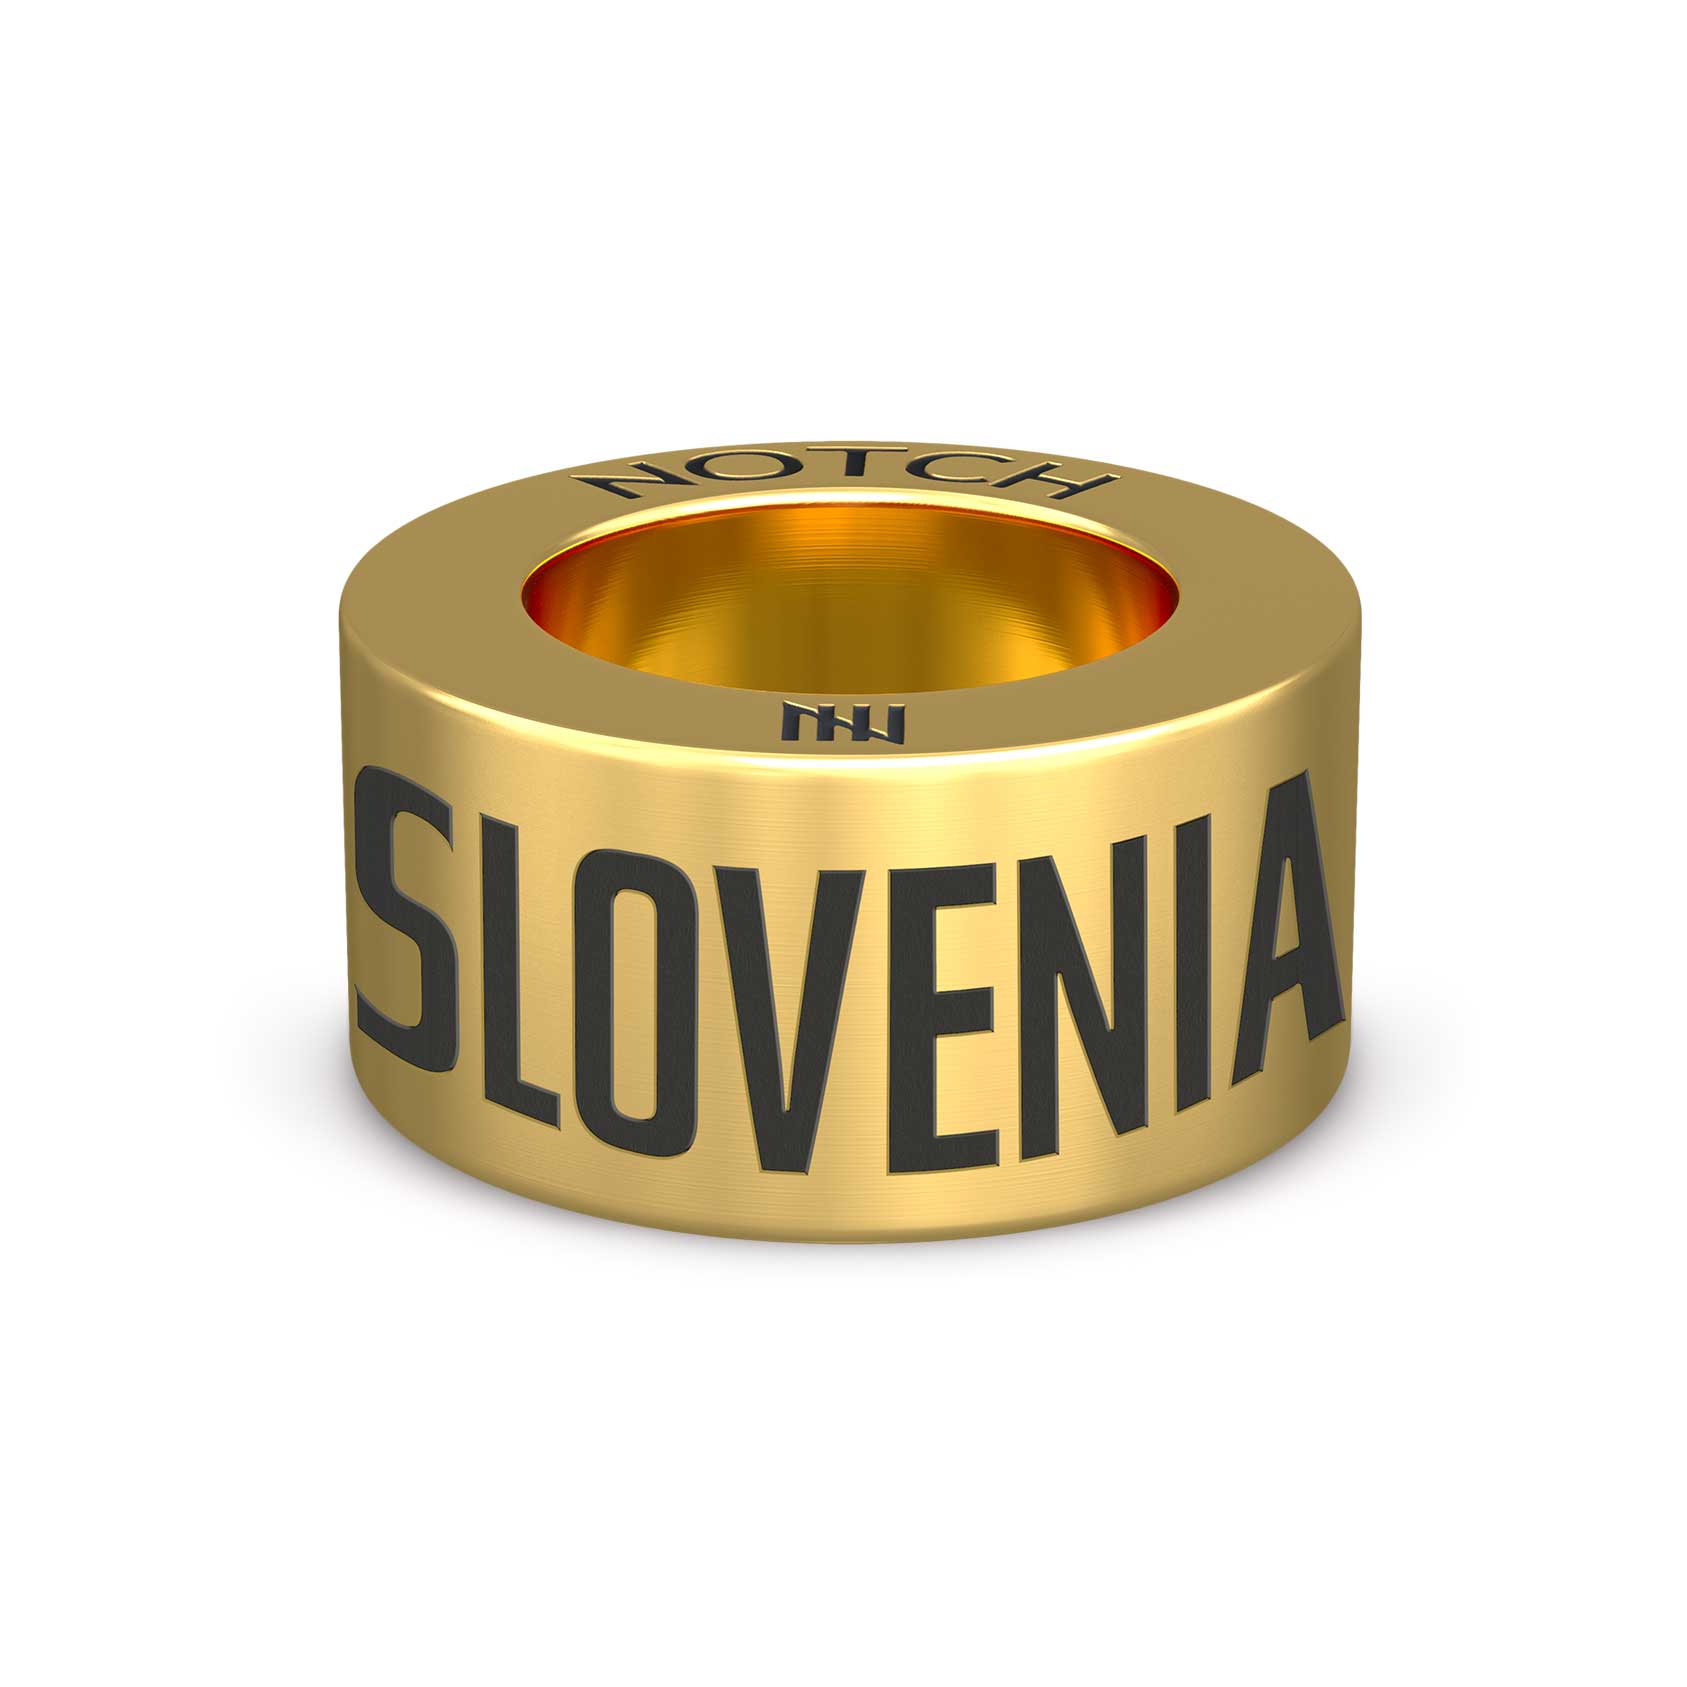 Slovenia 50K NOTCH Charm